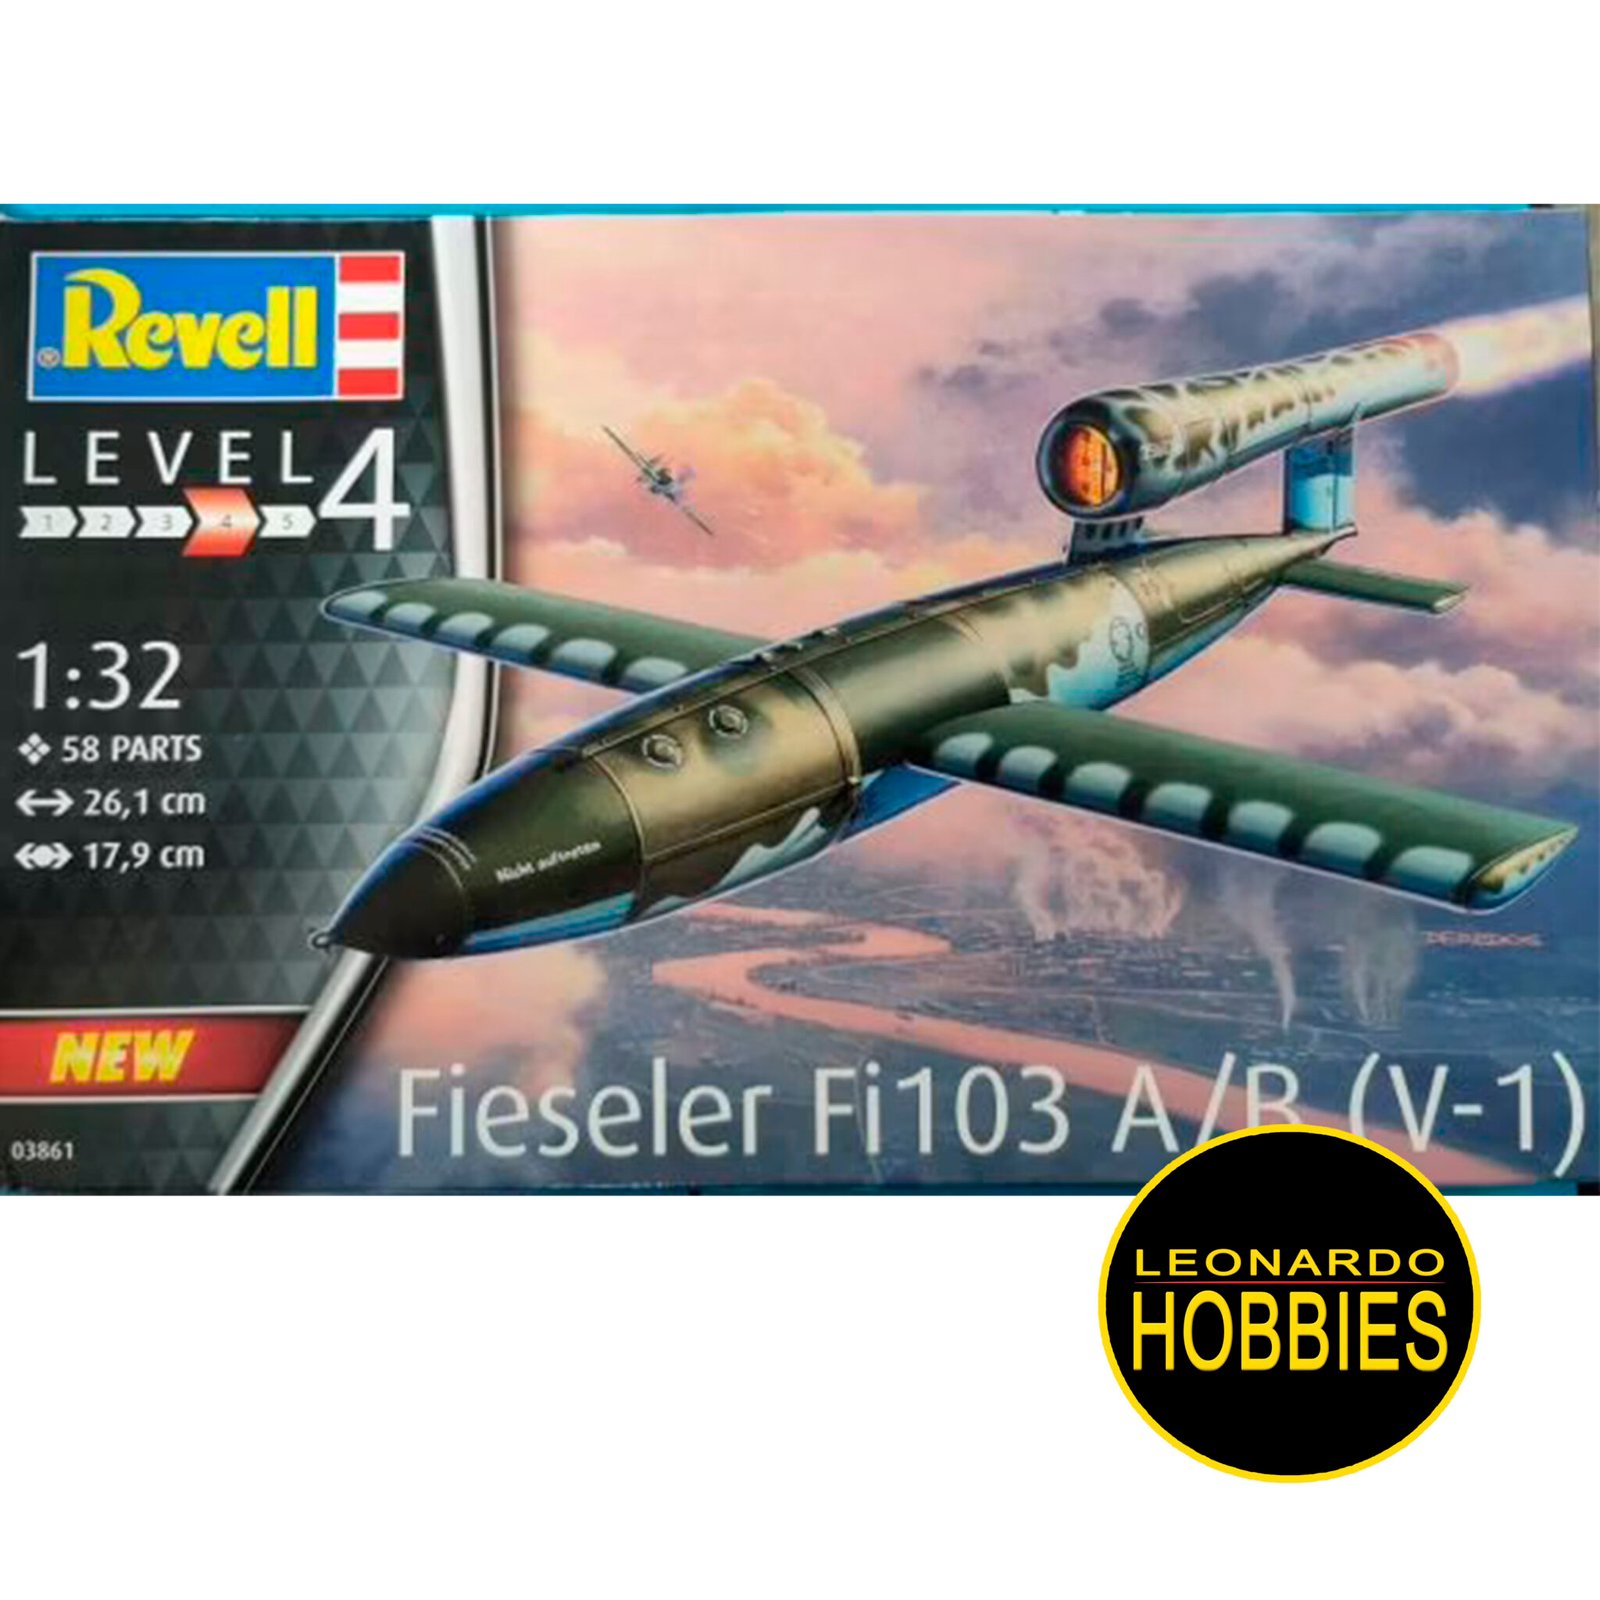 Fieseler Fi103 V-1 Escala 1/32 Revell 03861 – Leonardo Hobbies